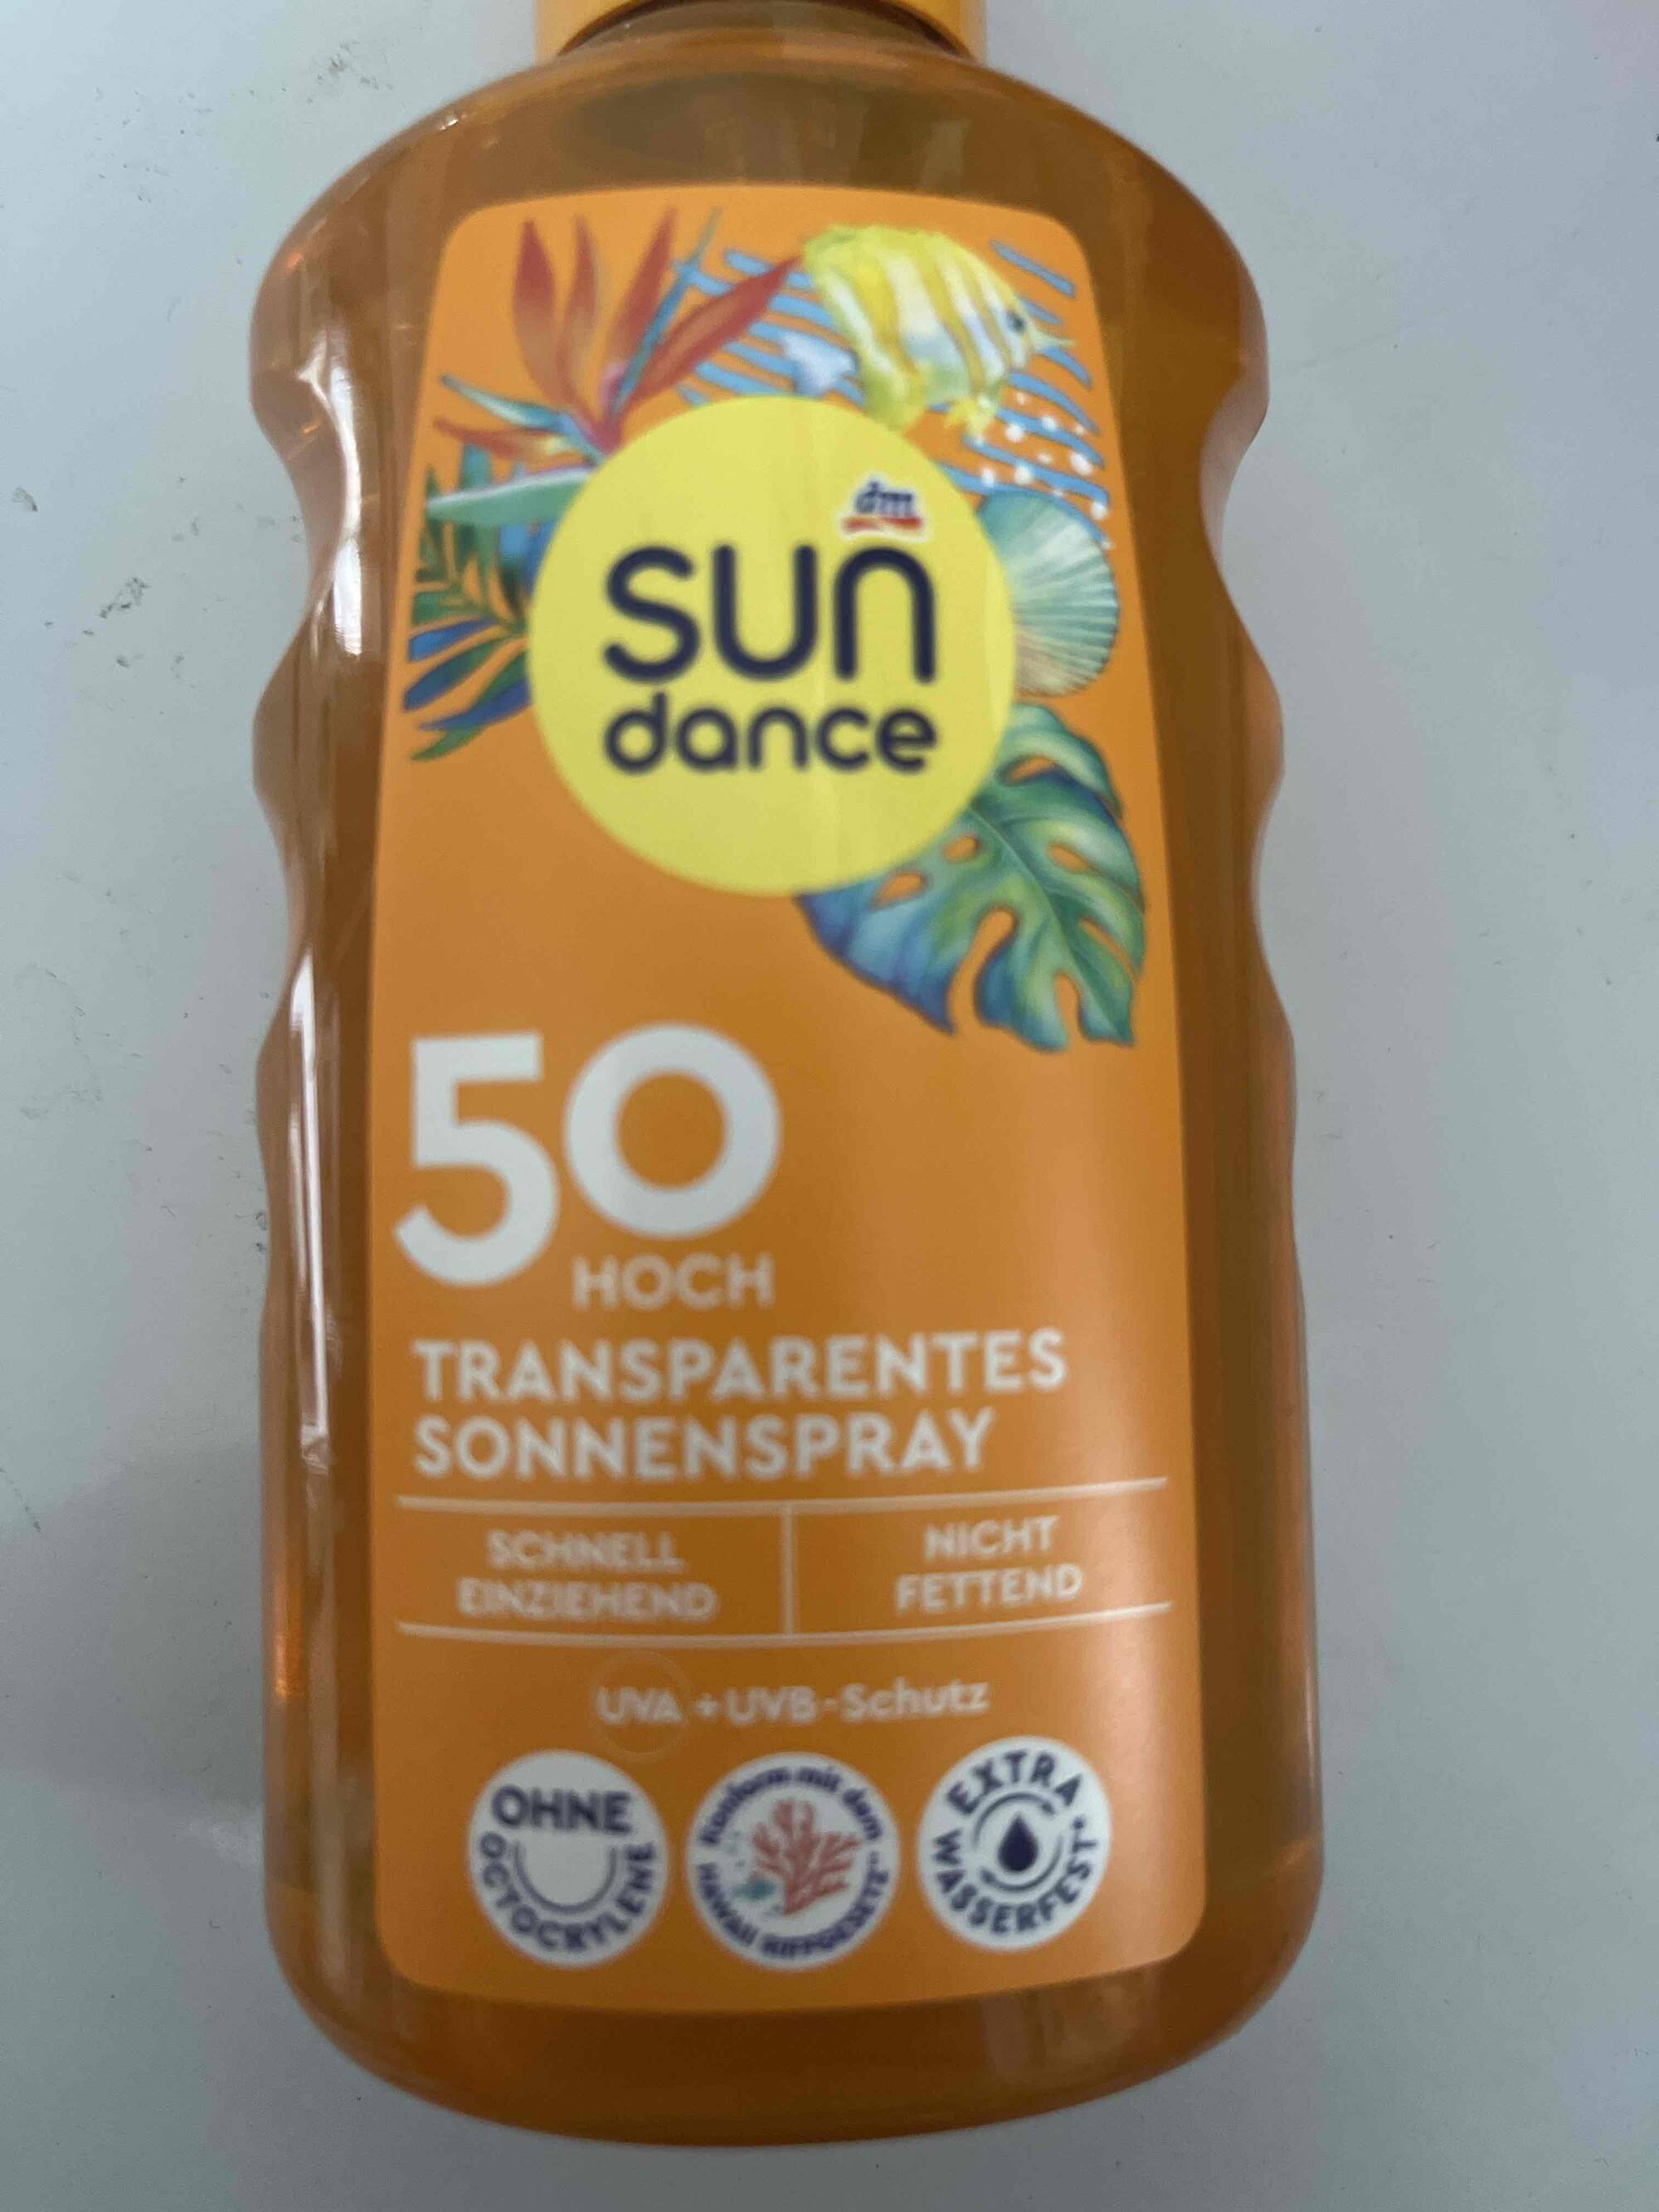 SUNDANCE - Transparentes sonnenspray 50 hoch